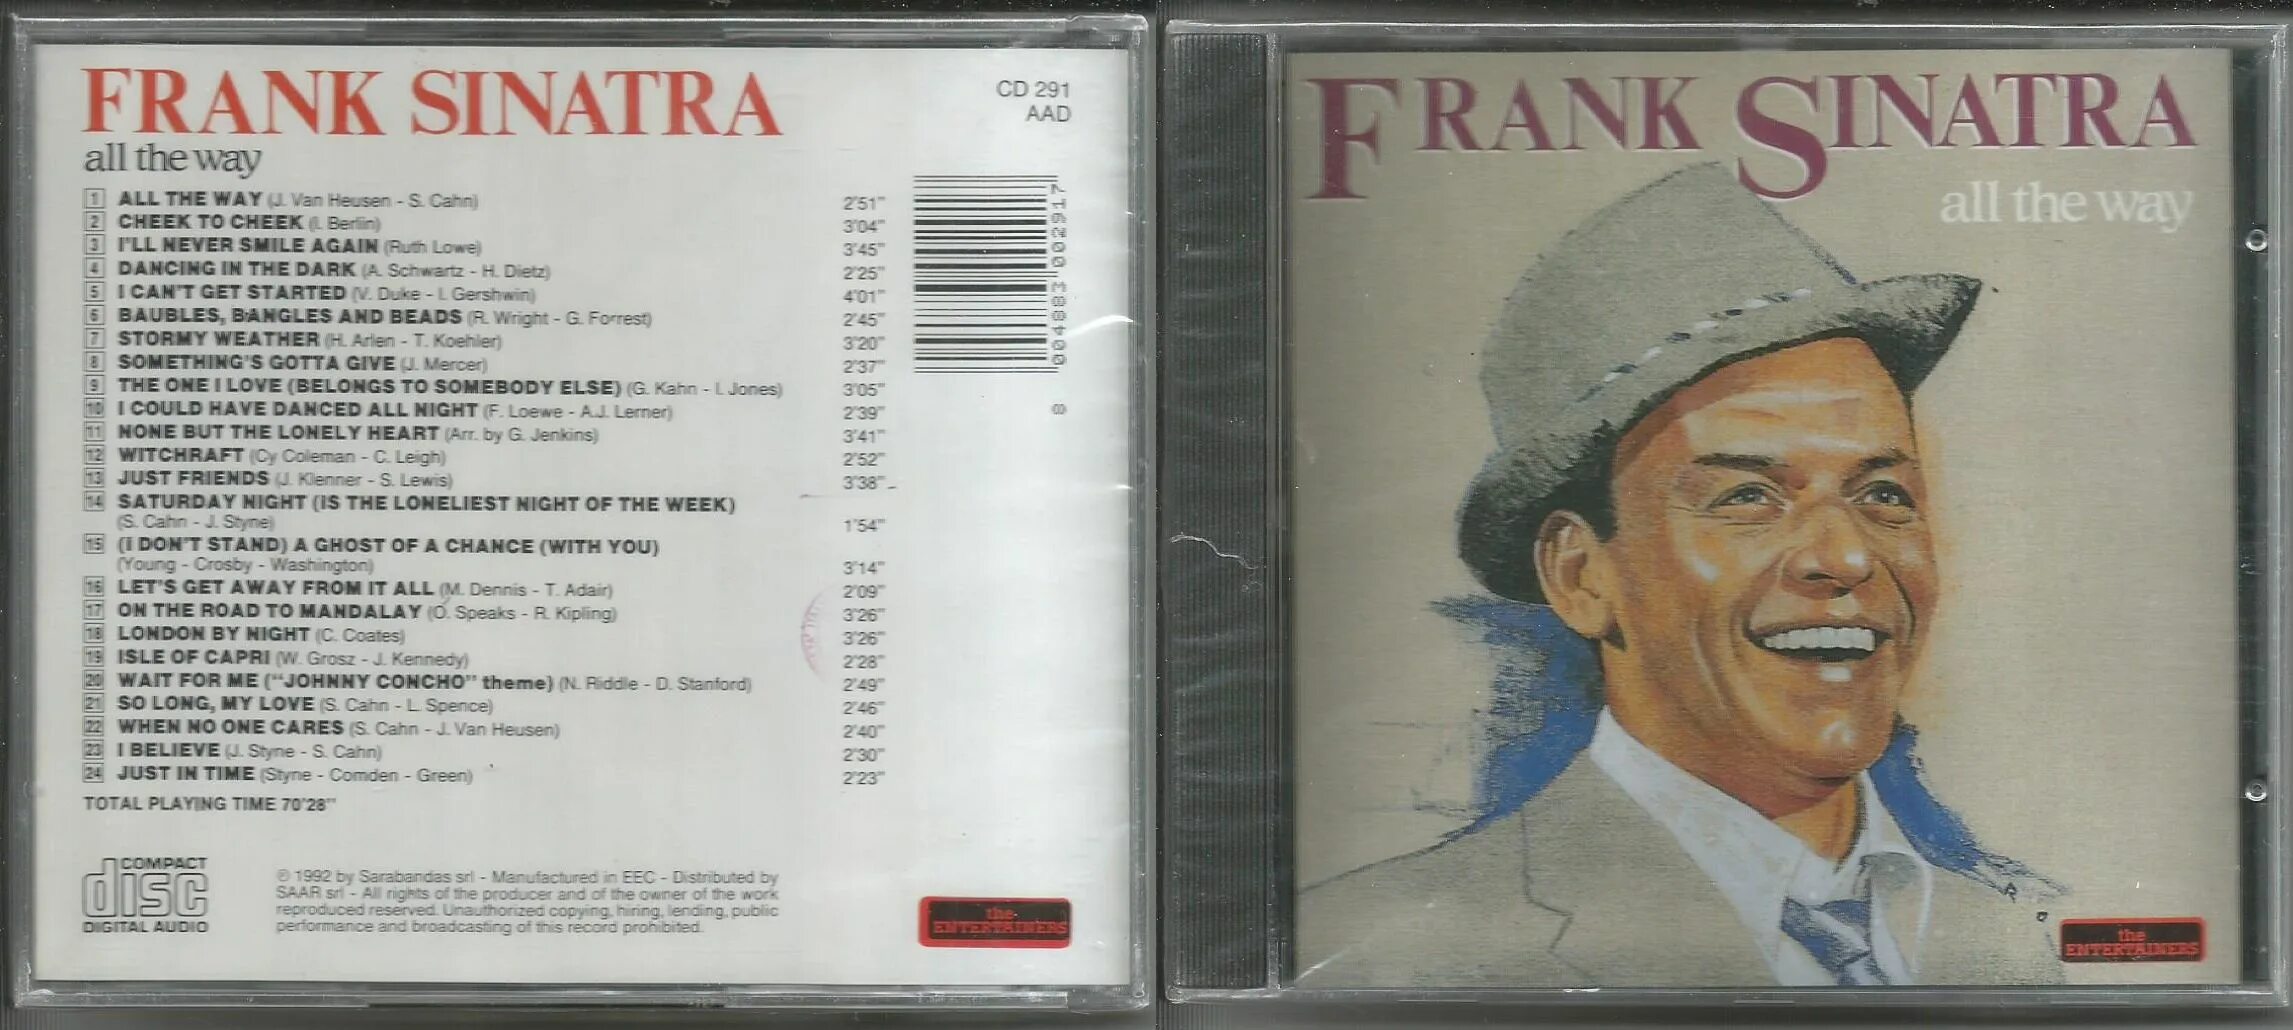 CD Sinatra, Frank: my way. All the way Синатра. All the way Фрэнк Синатра. Новогодняя пластинка Синатры.